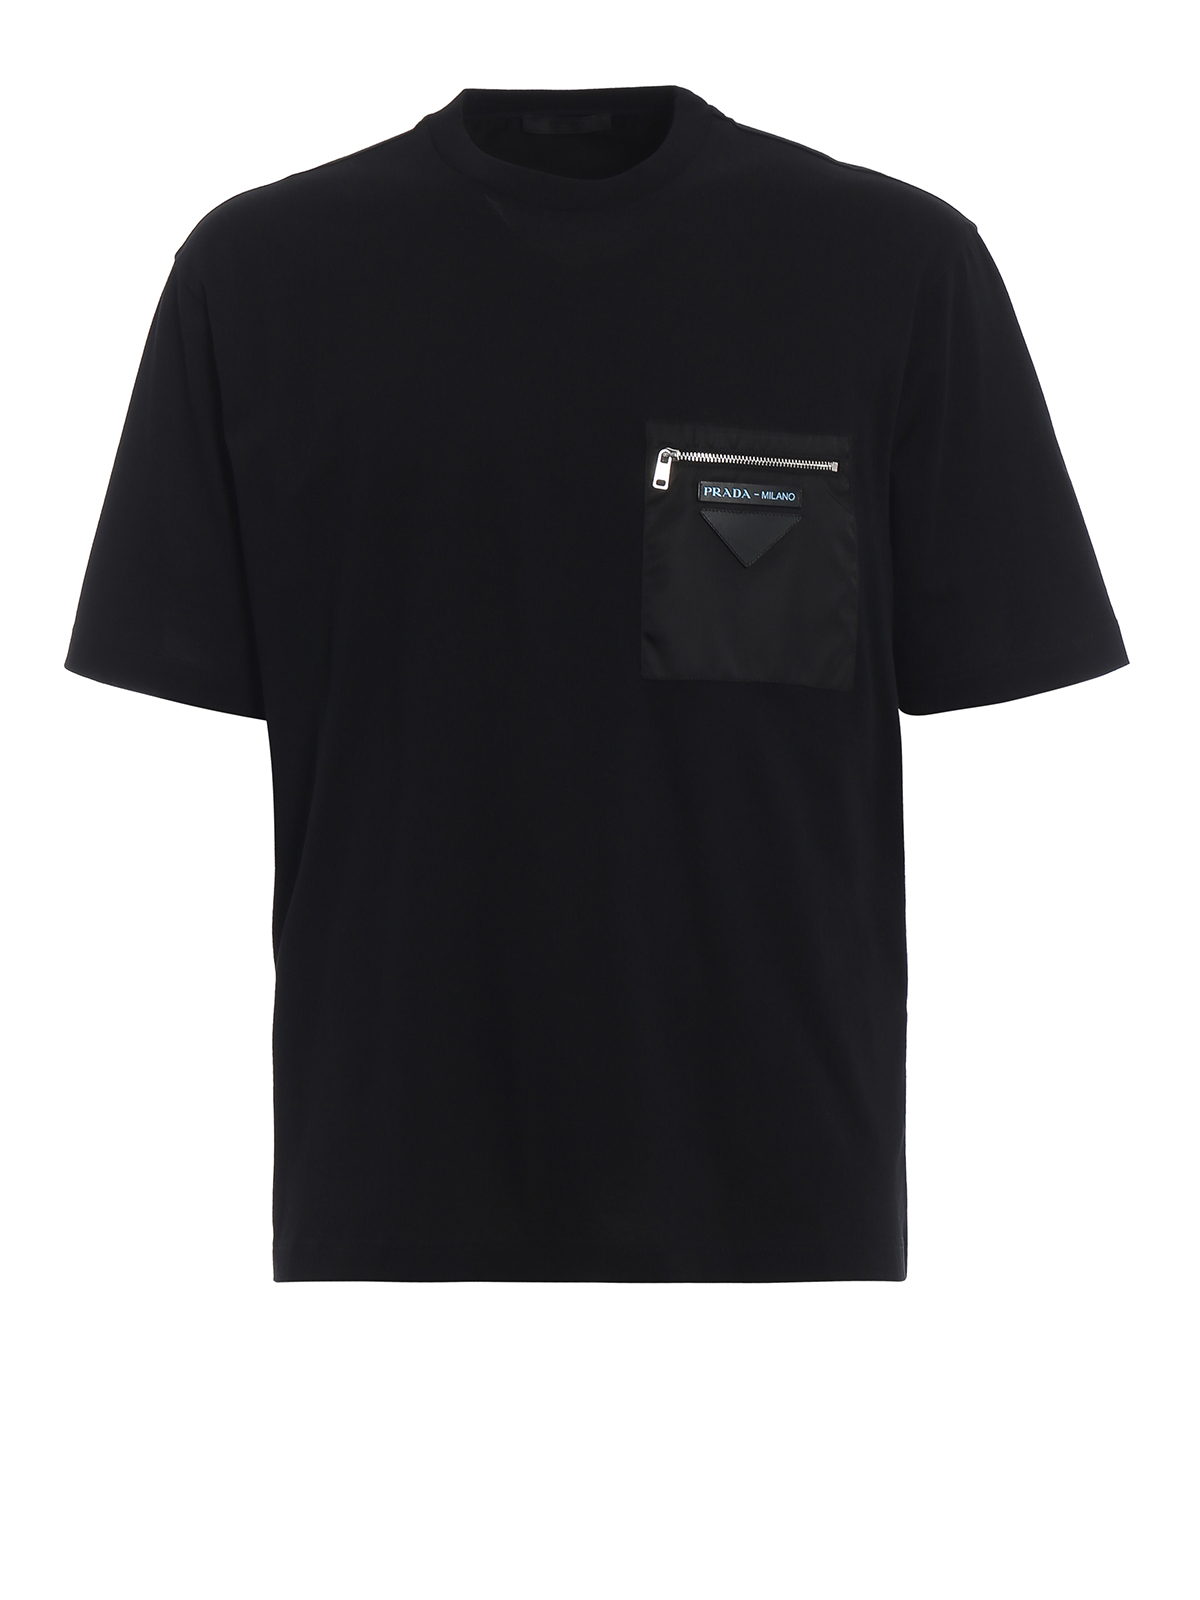 Tシャツ Prada - Tシャツ - 黒 - UJN5101R4F002 | iKRIX shop online